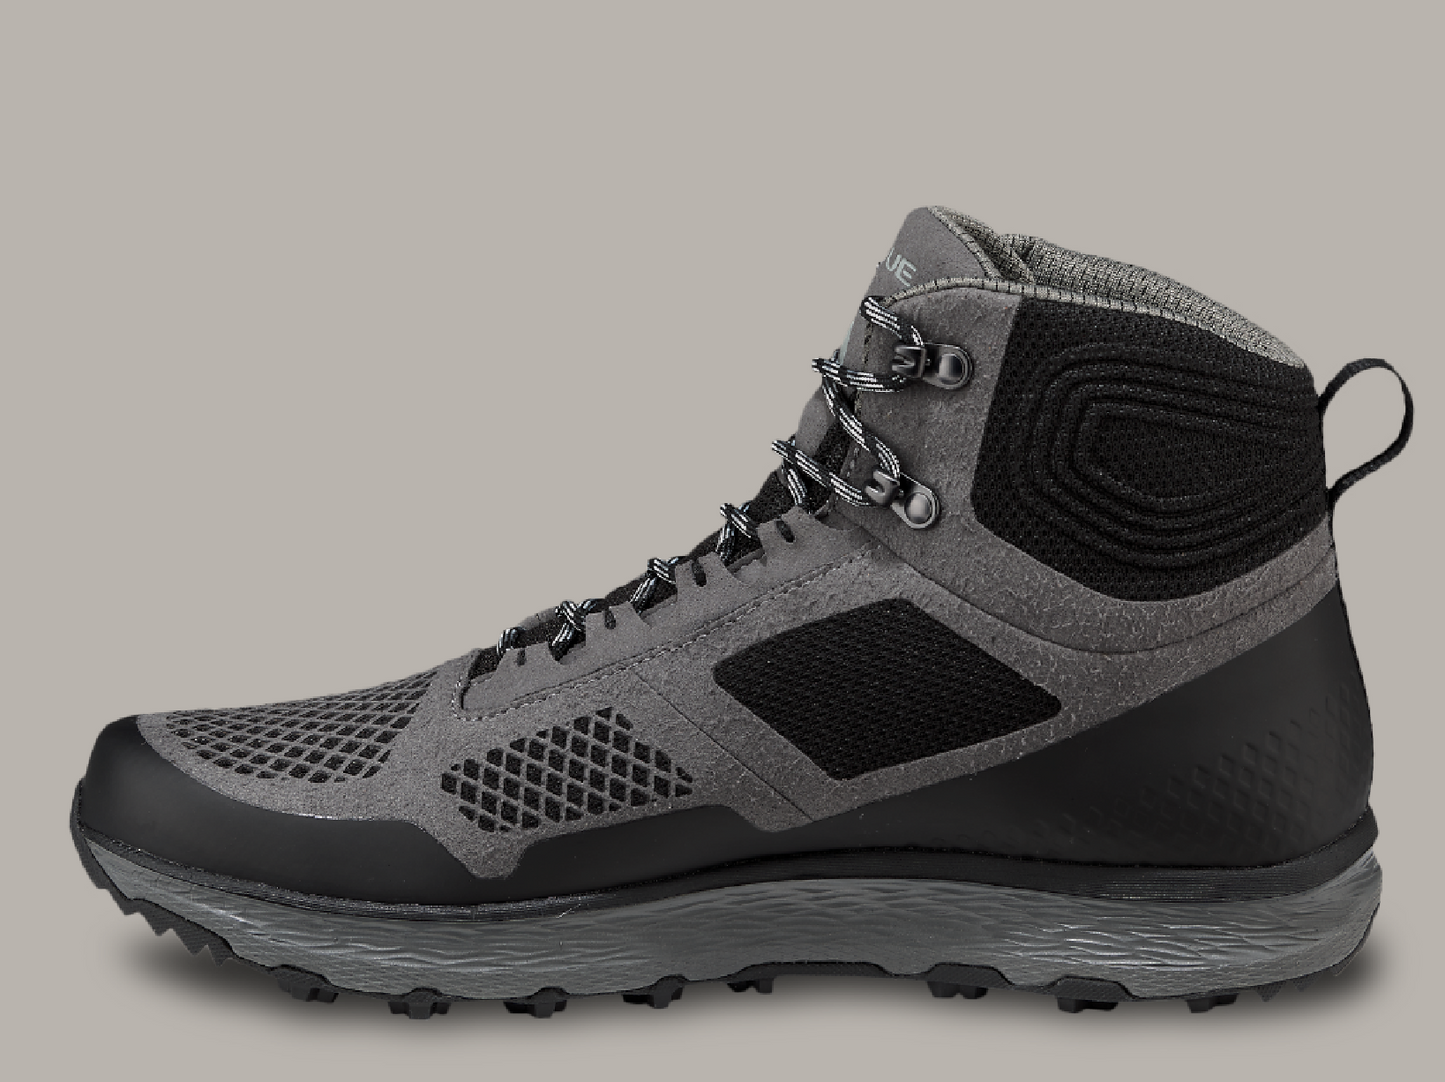 VASQUE - Hiking shoes for men